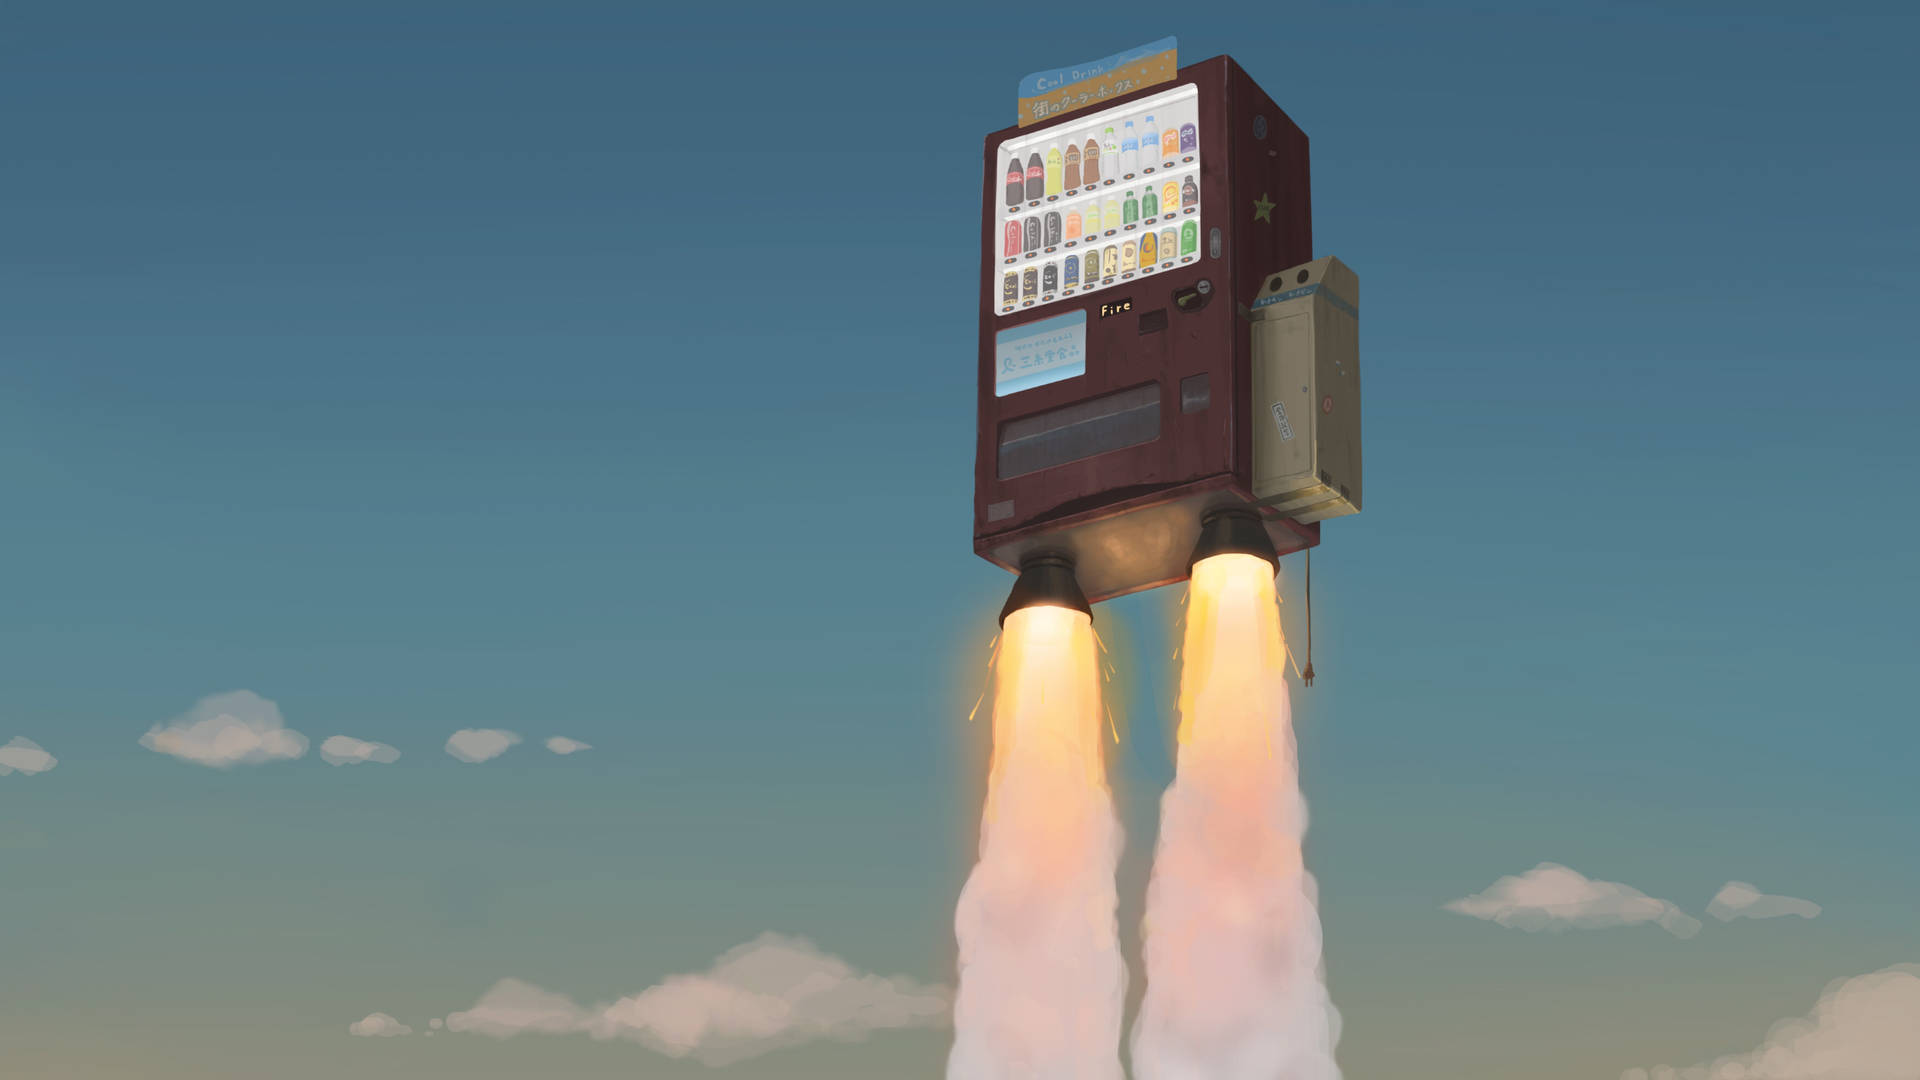 Rocket Vending Machine Background